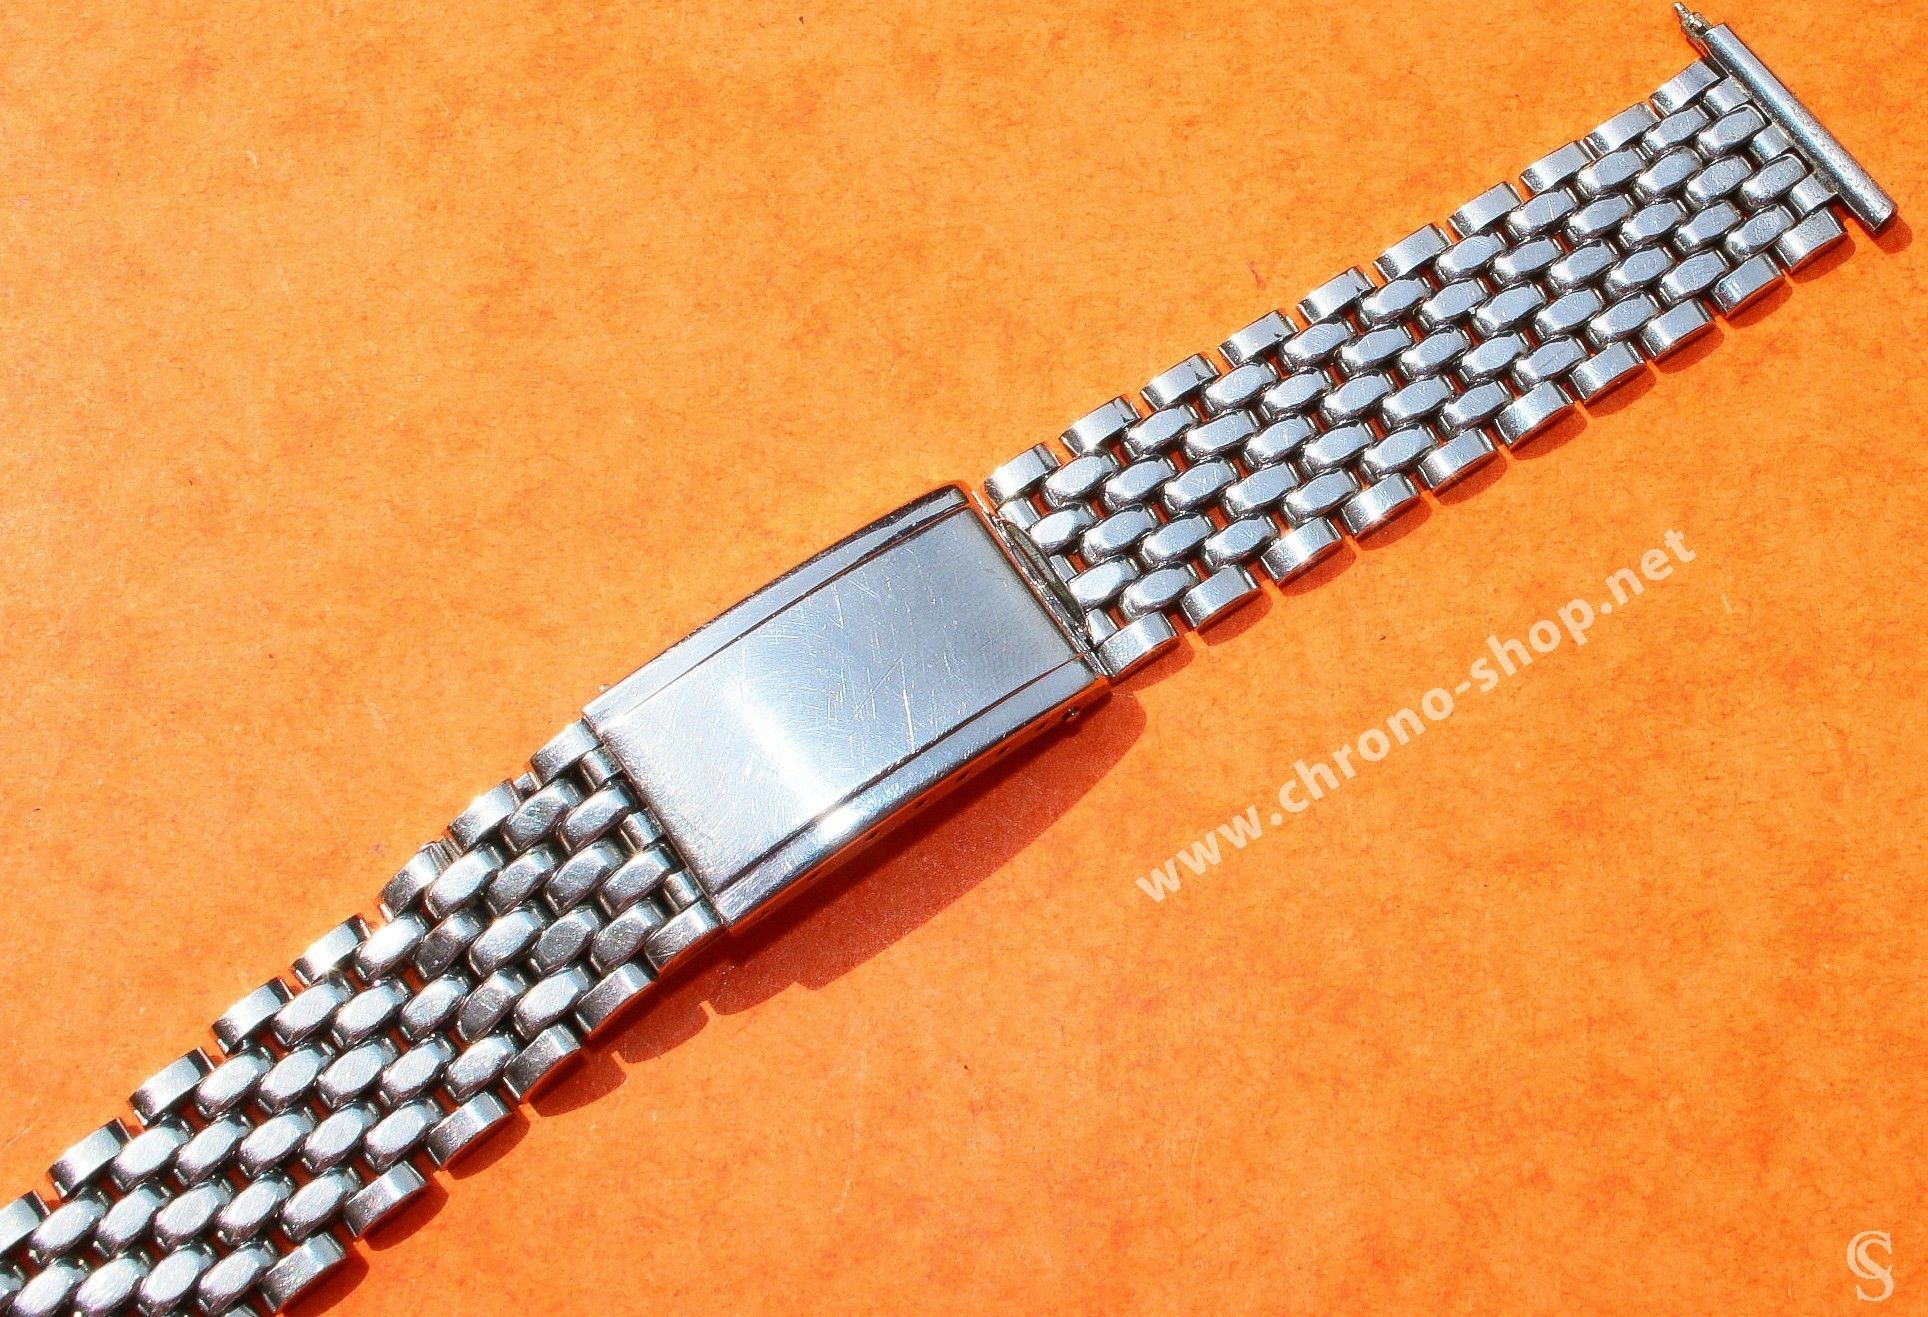 Rolex Bracelet - Beads of Rice - The Vintageur